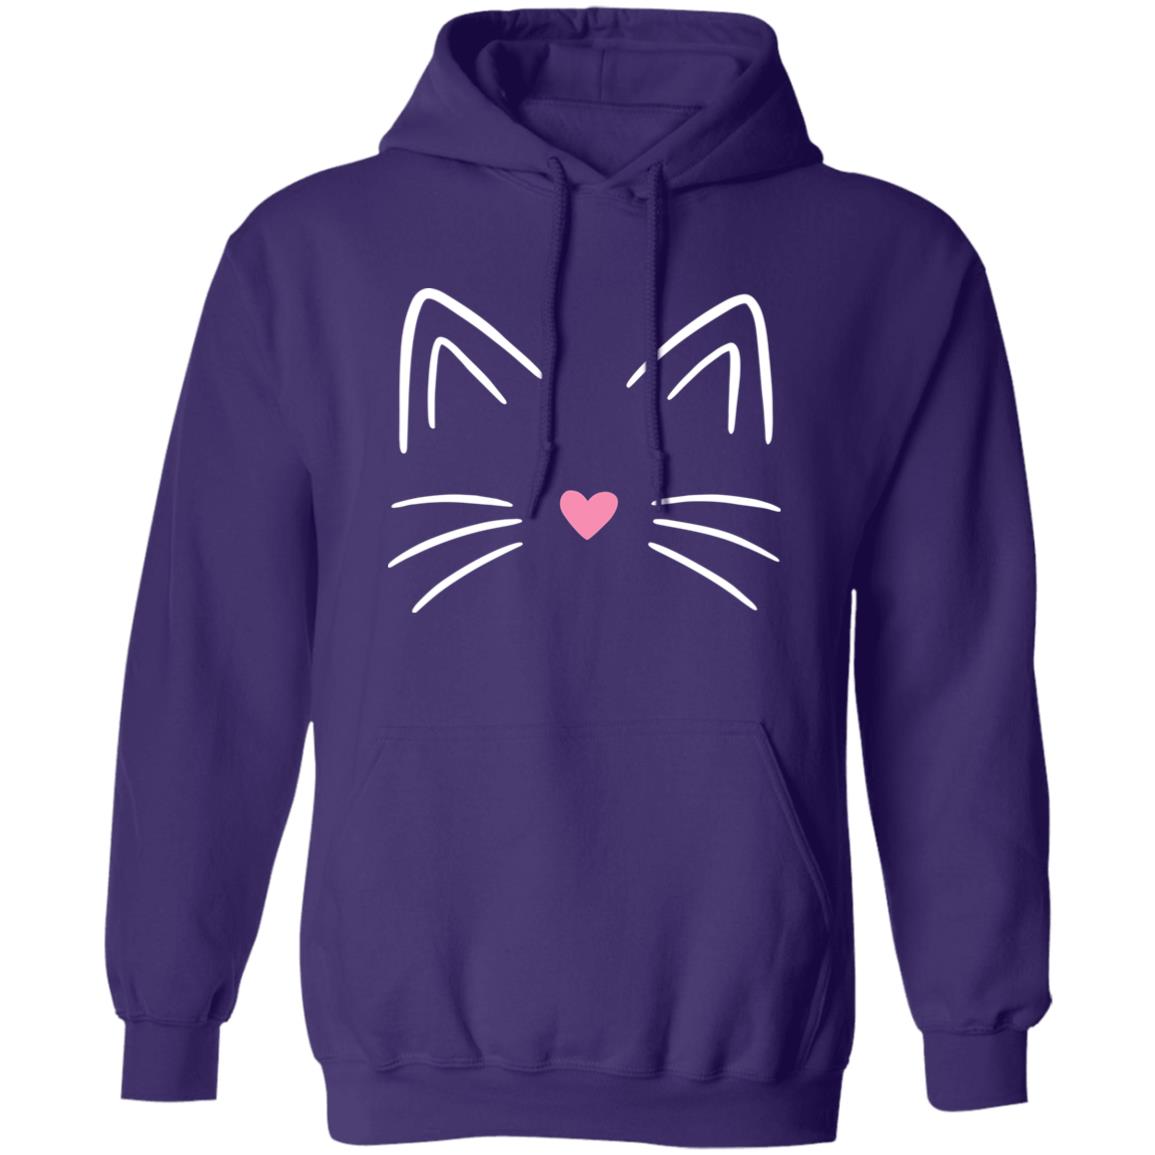 Kitty Face Hoodie Purple - iHeartCats.com